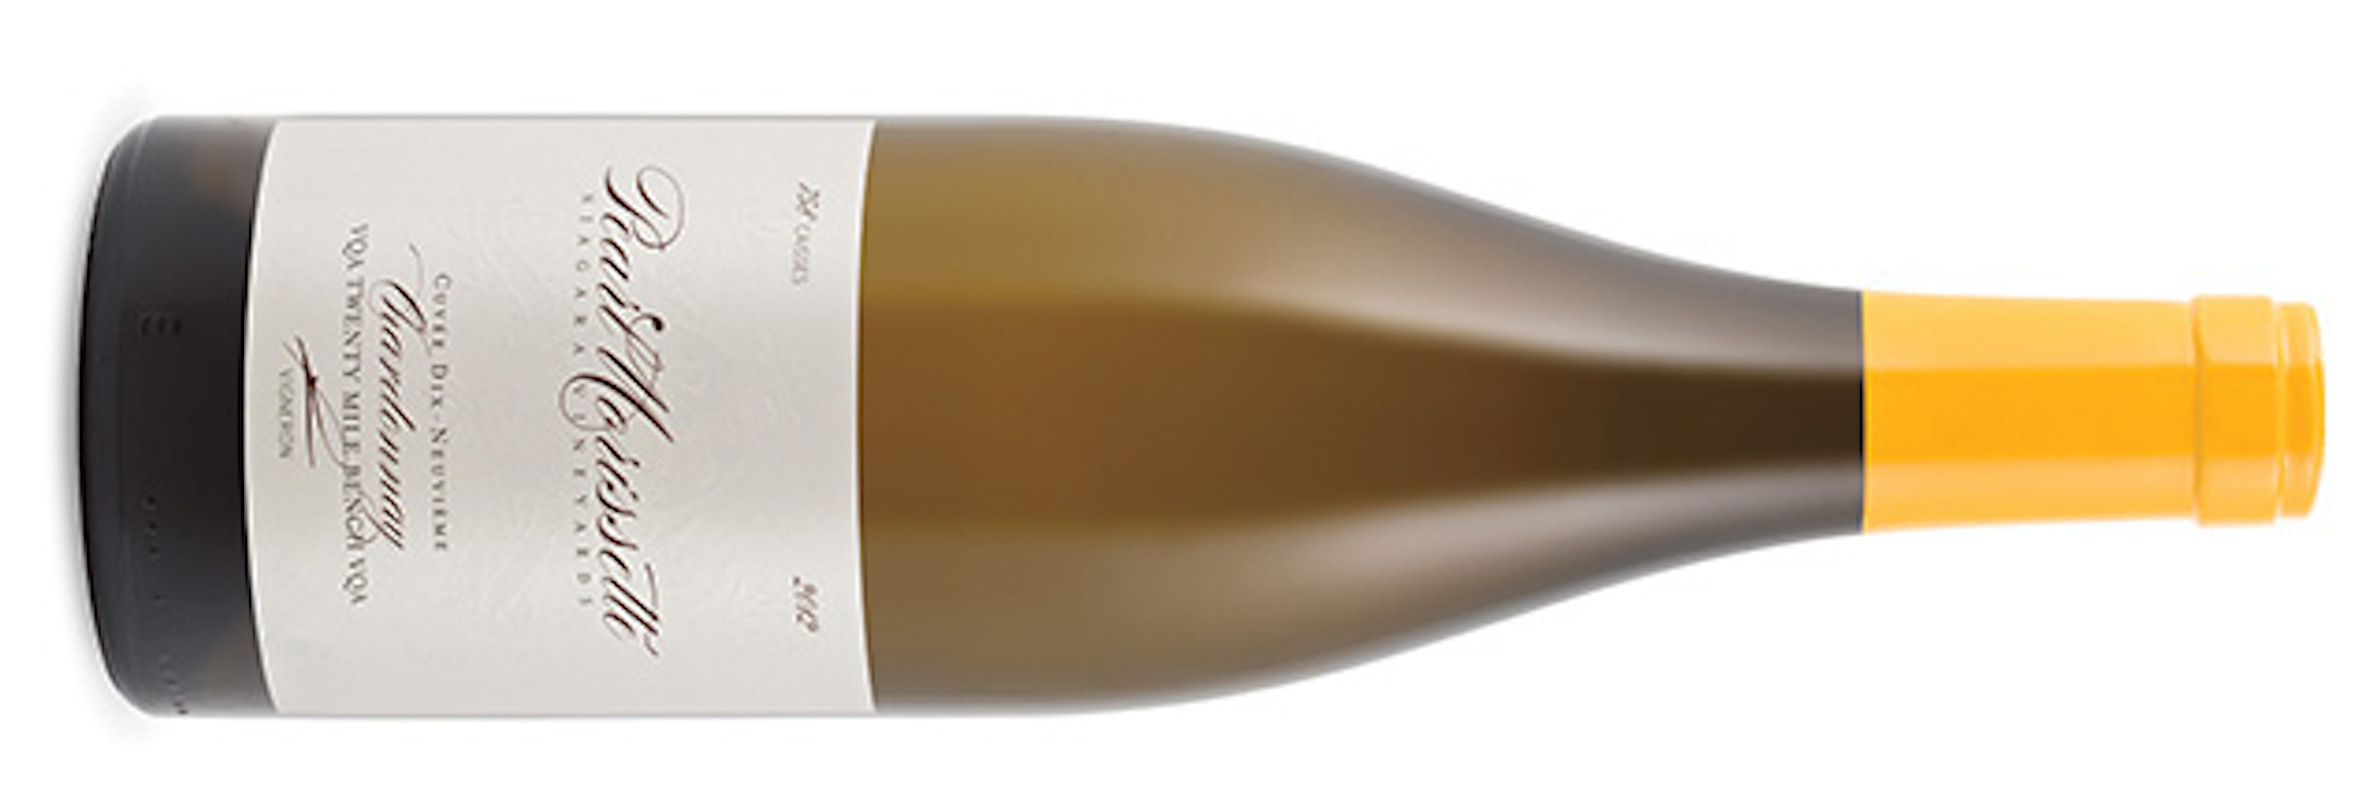 Pearl-Morissette-Cuvee-Dix-Neuvieme-Chardonnay-2012-Label